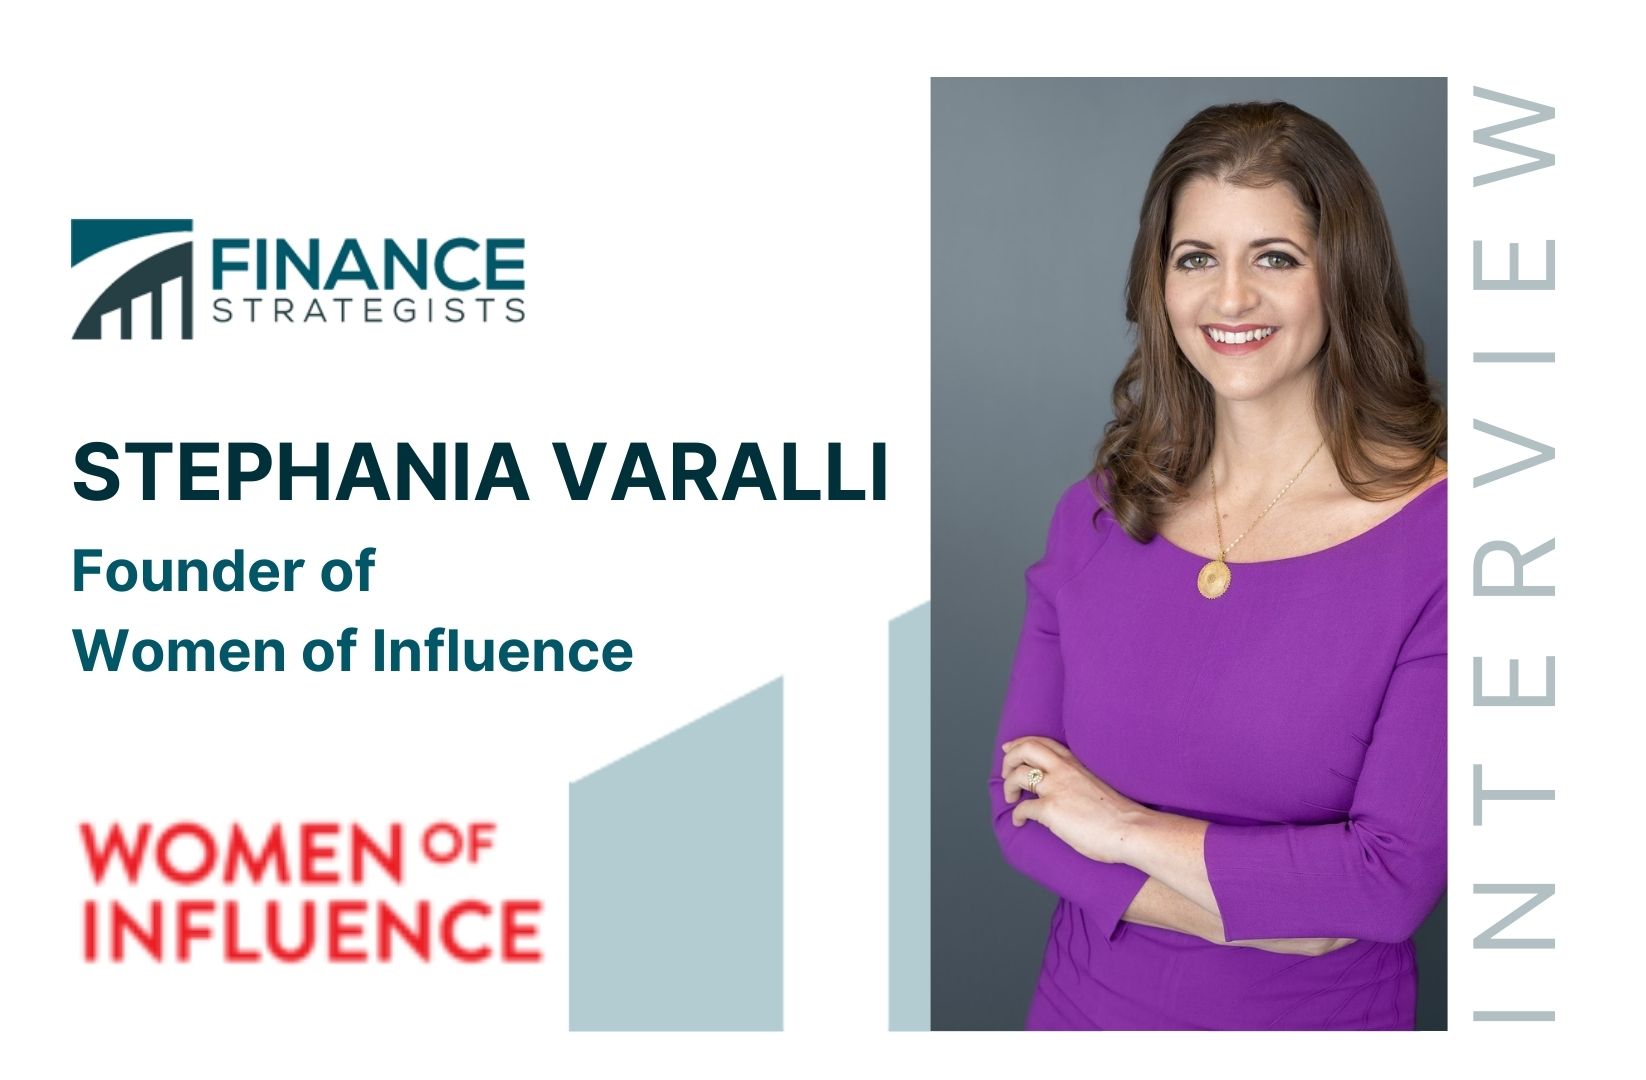 Finance Strategists - Women of Influence